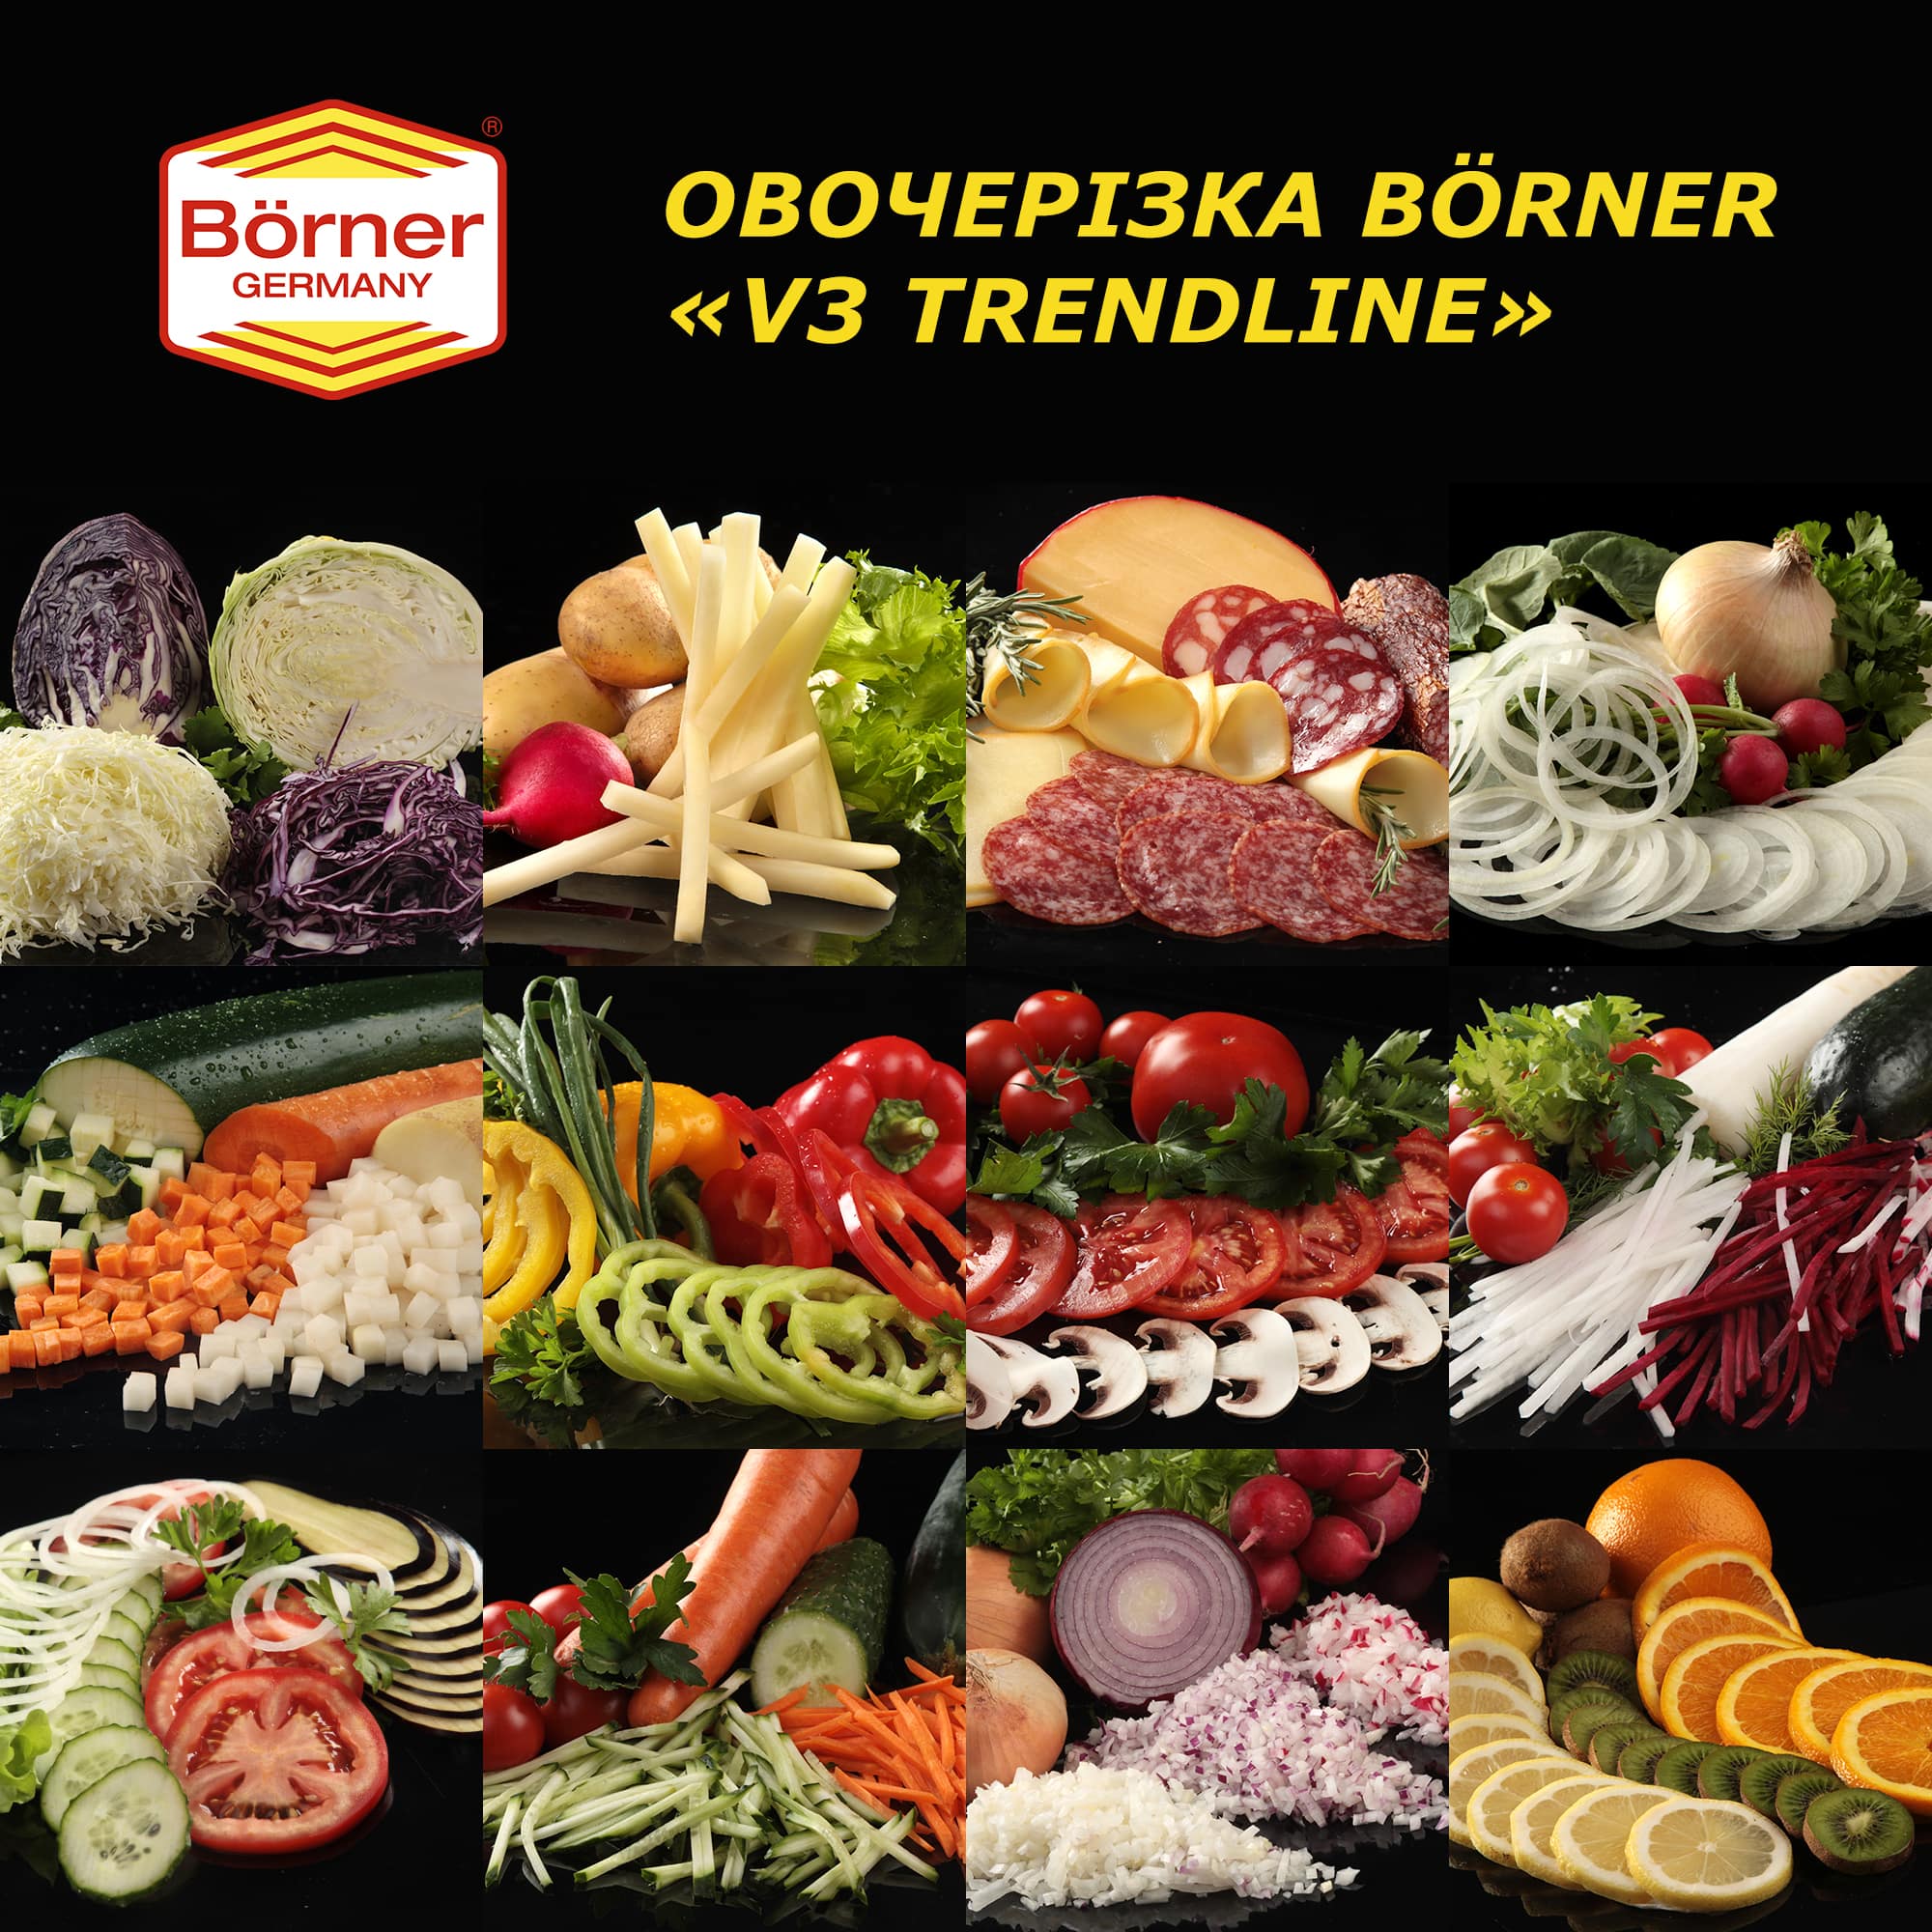 Овощерезка комплект Borner V3 Trend (Оптима) 1321047